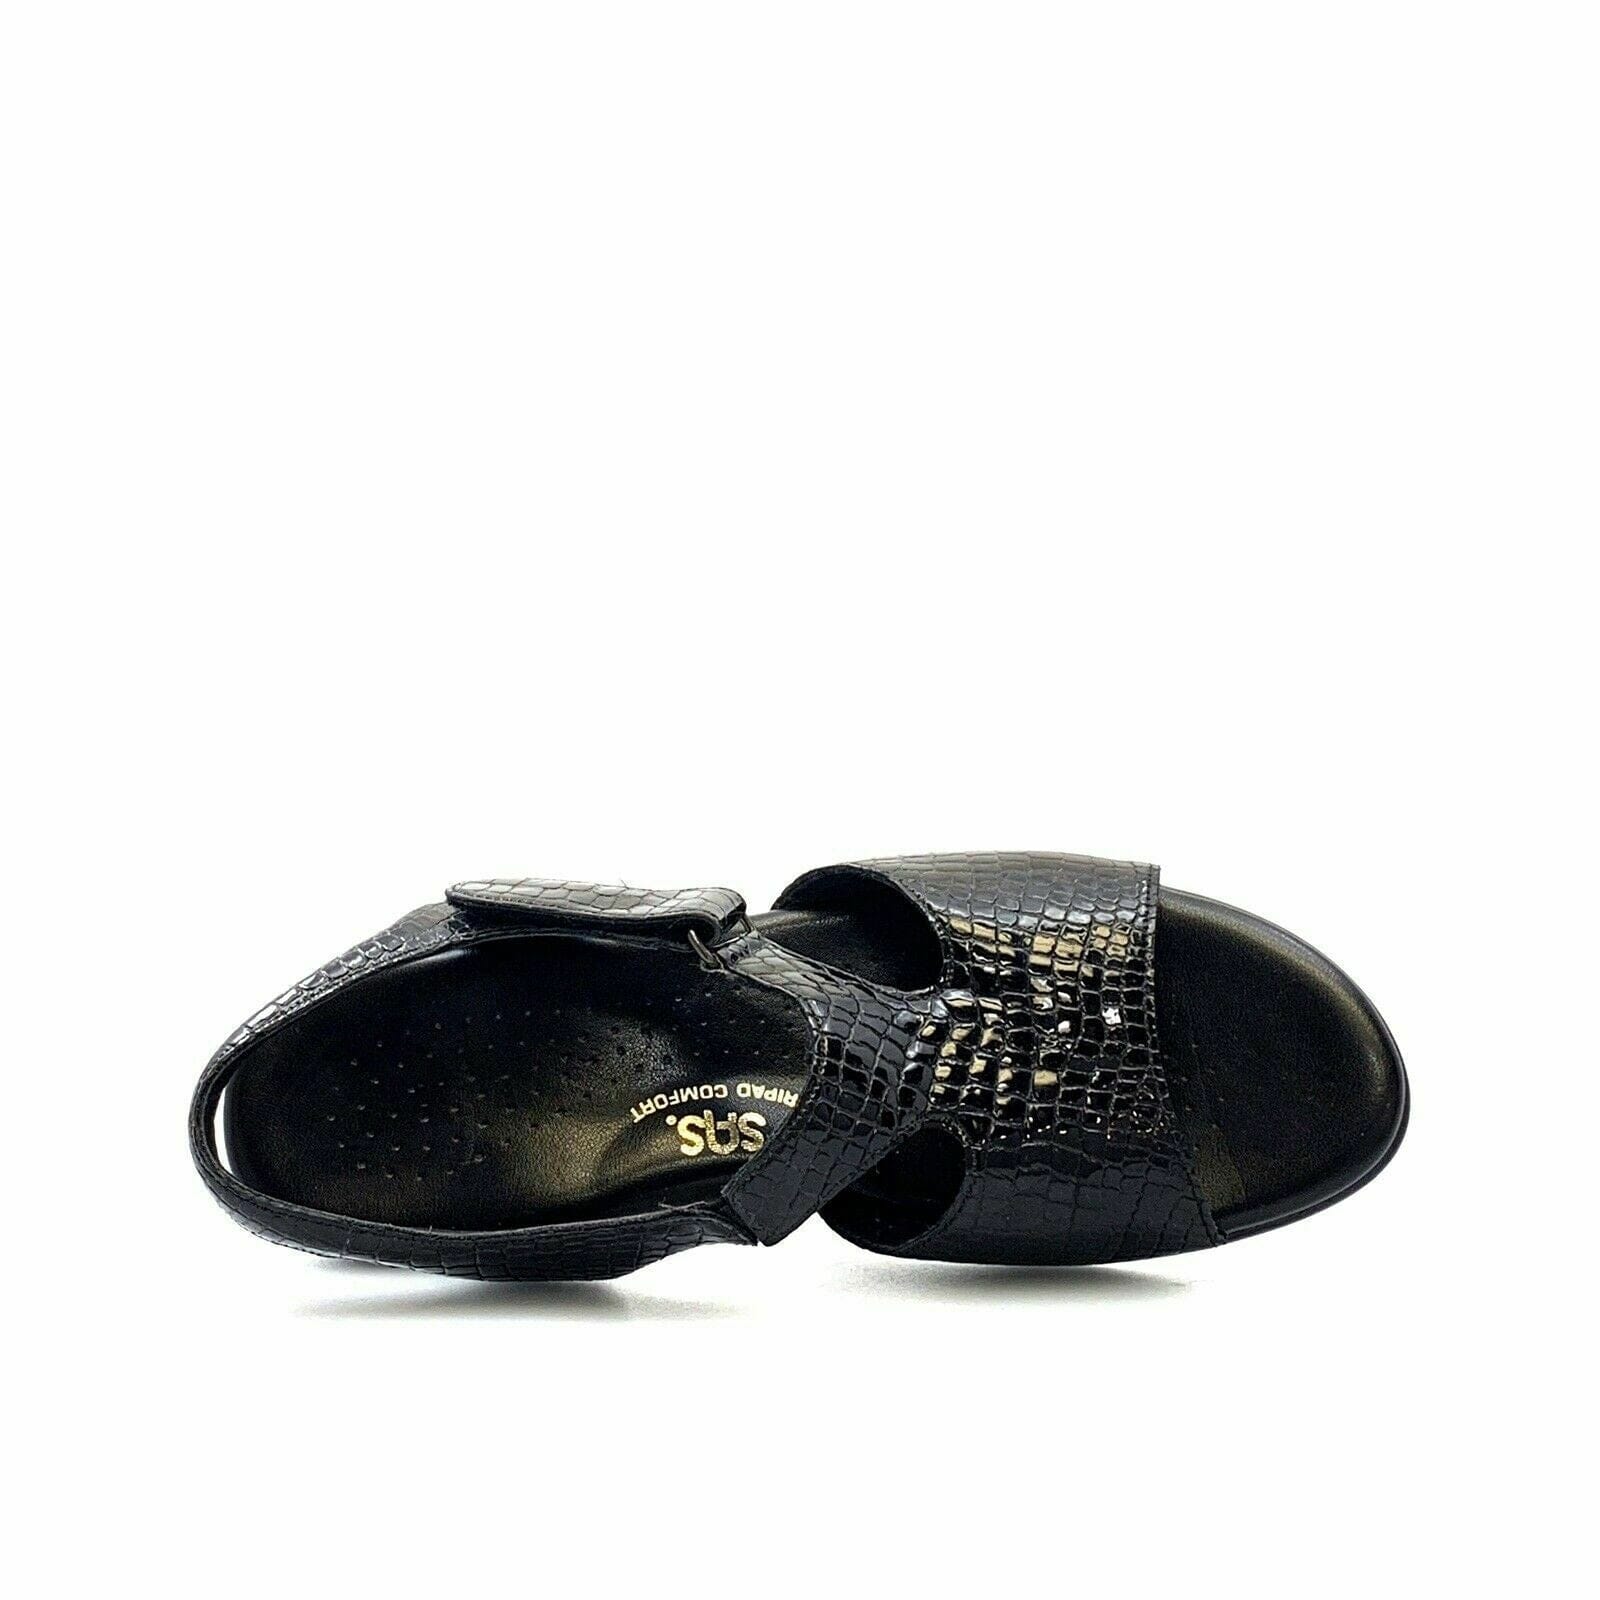 SAS Womens Patent Leather Sandals Shoes, Black Snakeskin - Size 9.5M - parsimonyshoppes